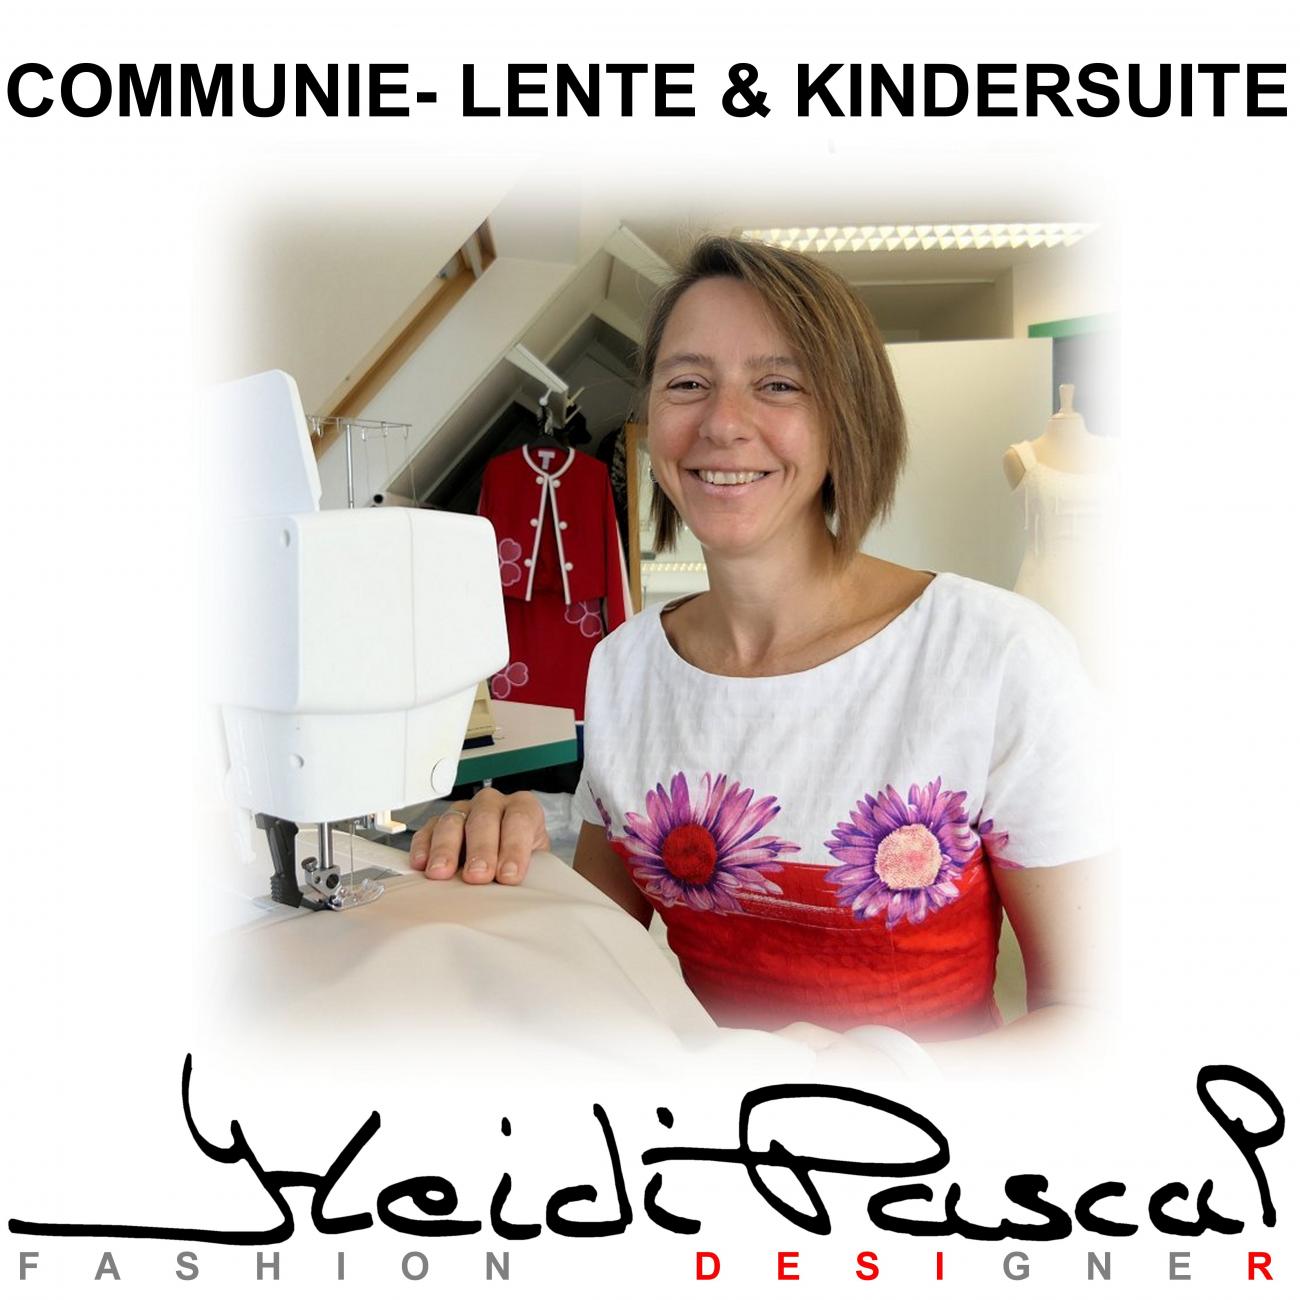 Heidi Pascal Fashion Designer Communie- Lente & Kindersuite